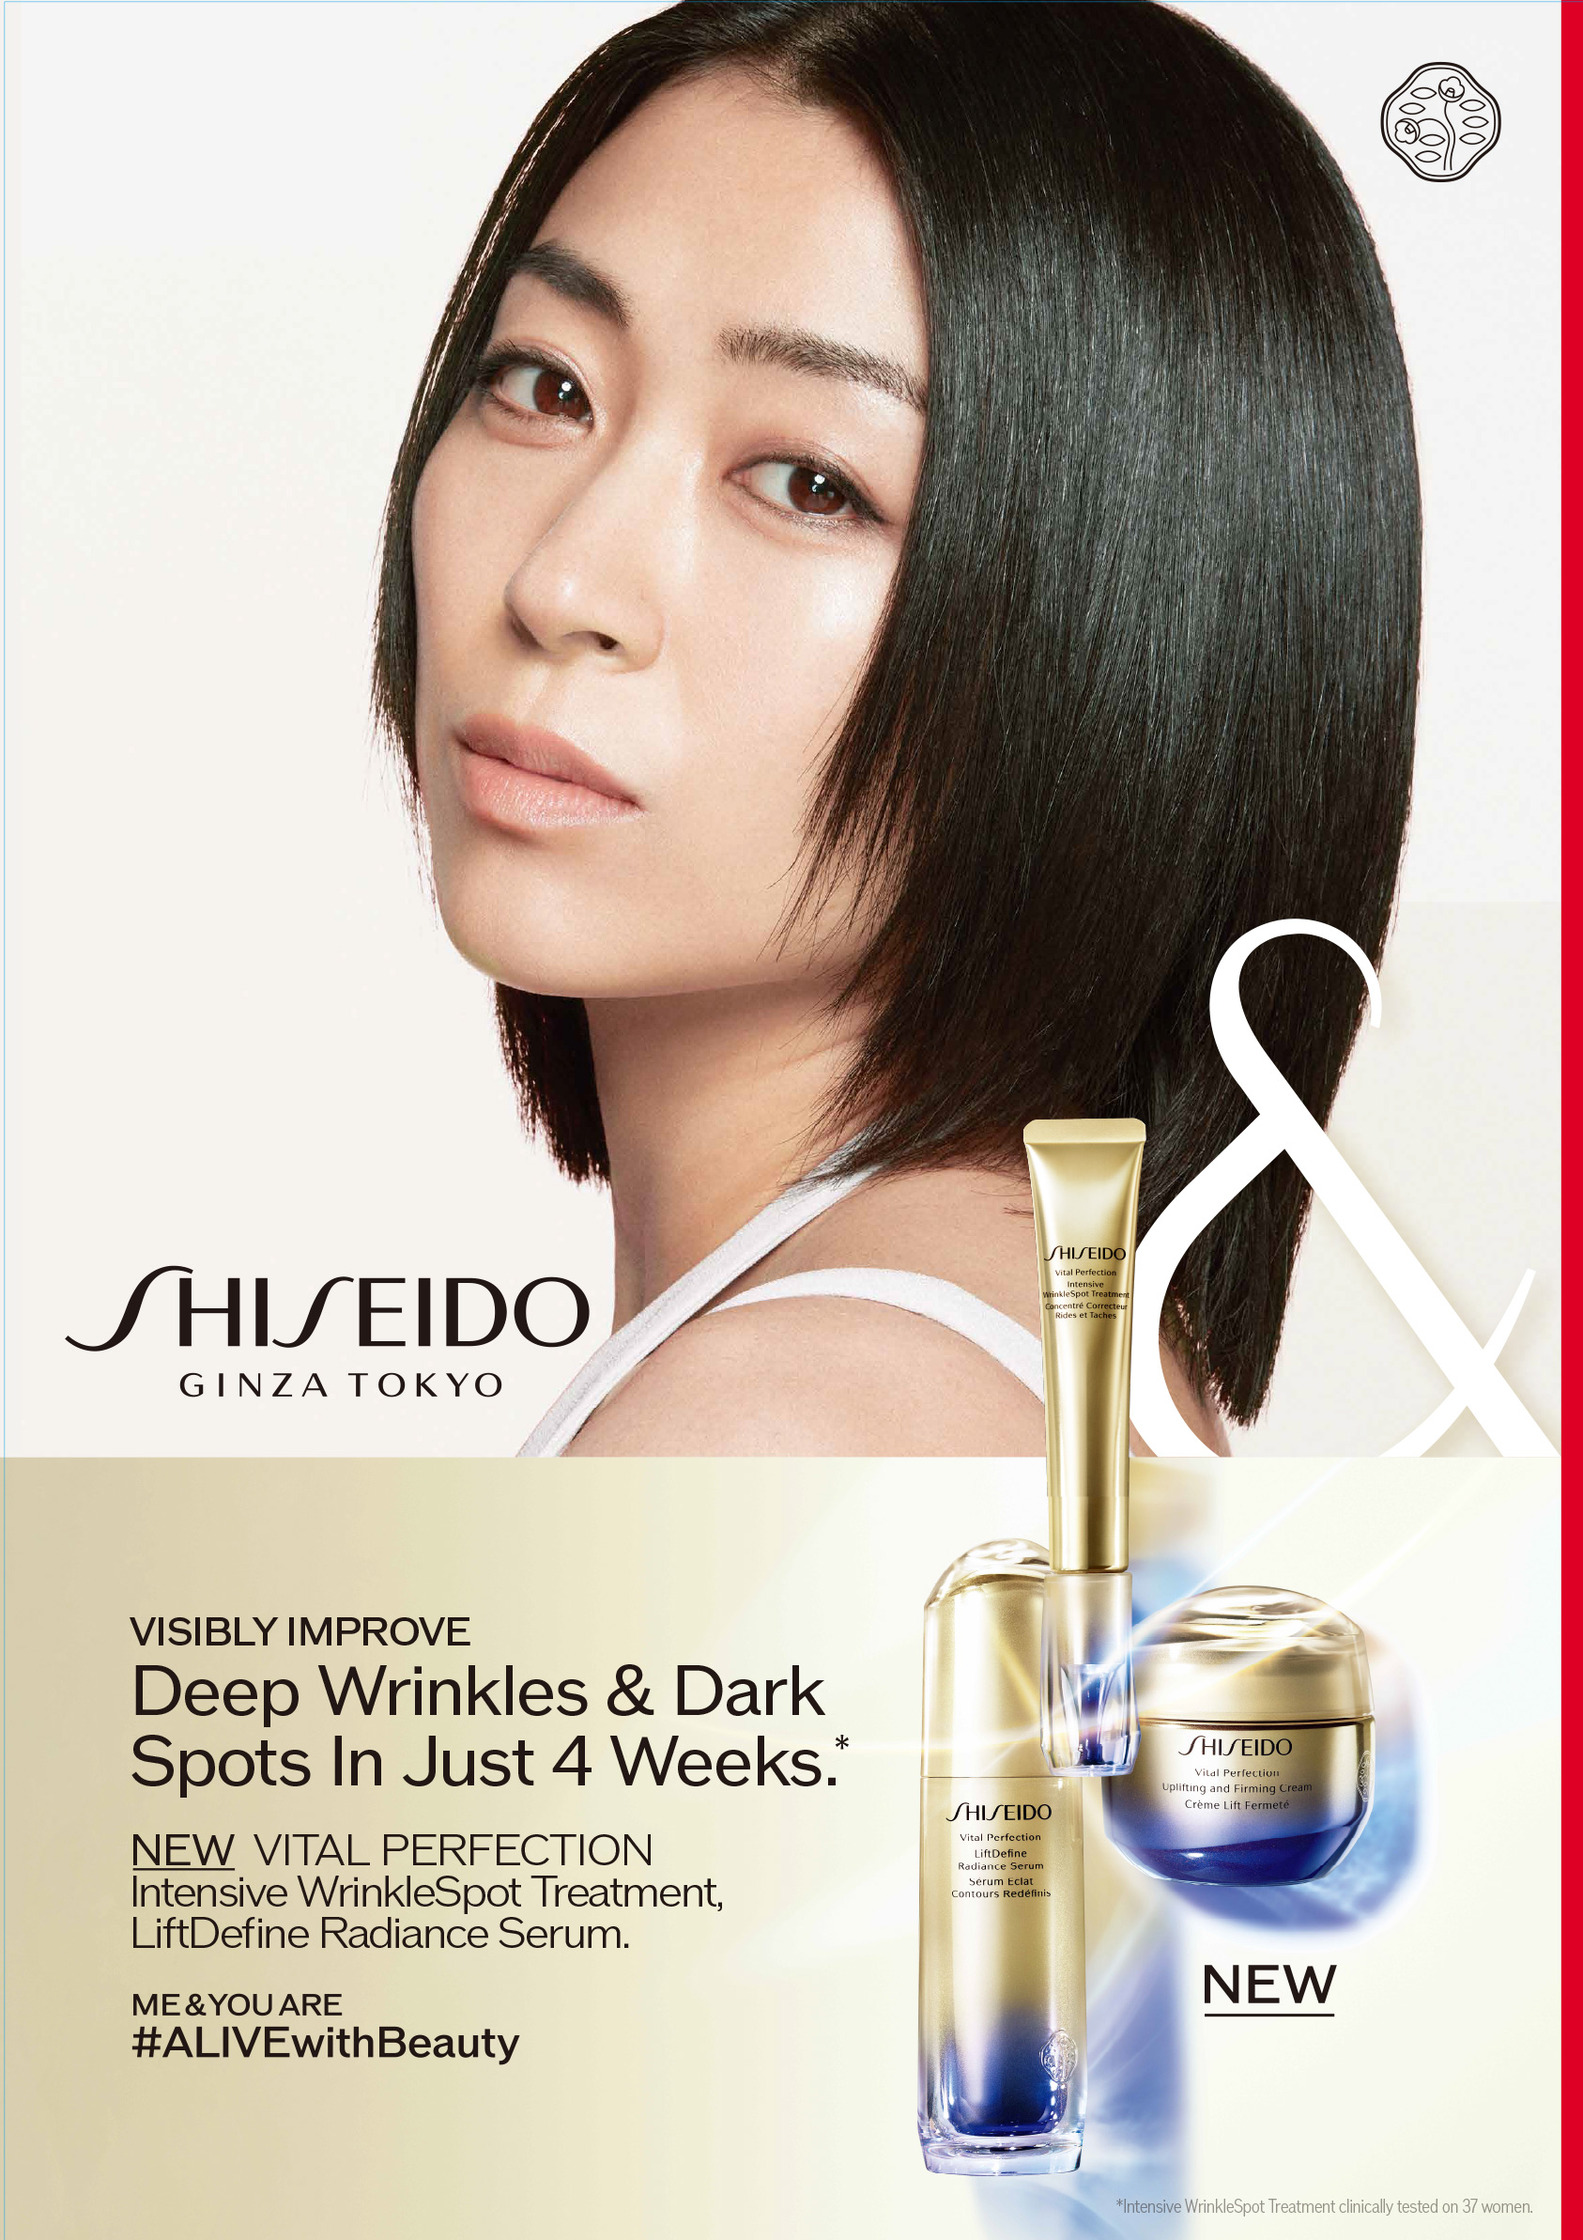 shiseido campaign with Hikaru Utada